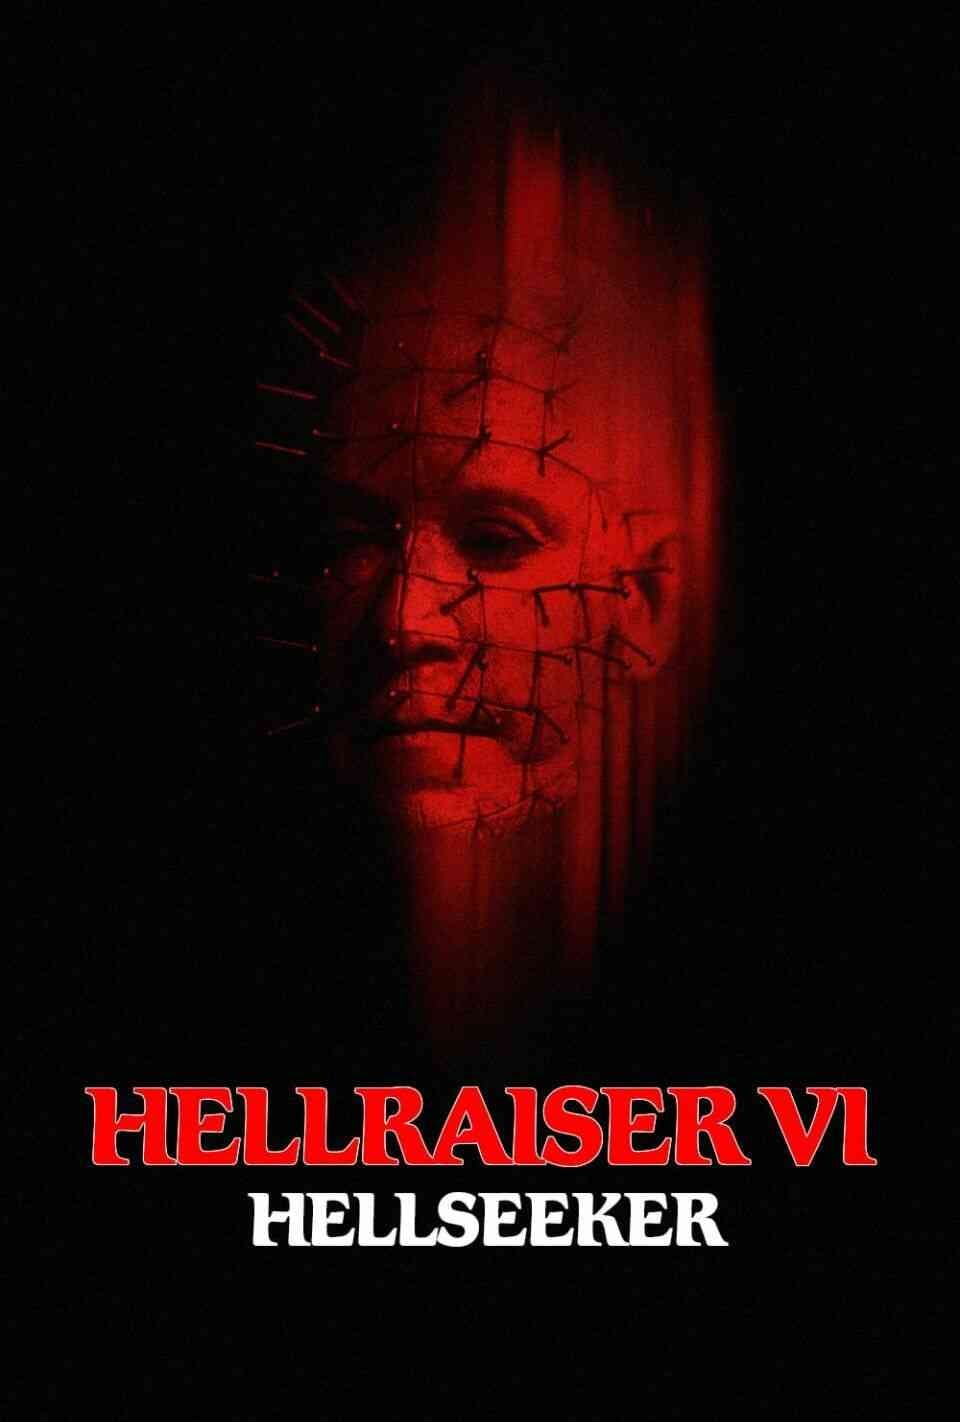 Read Hellseeker screenplay (poster)